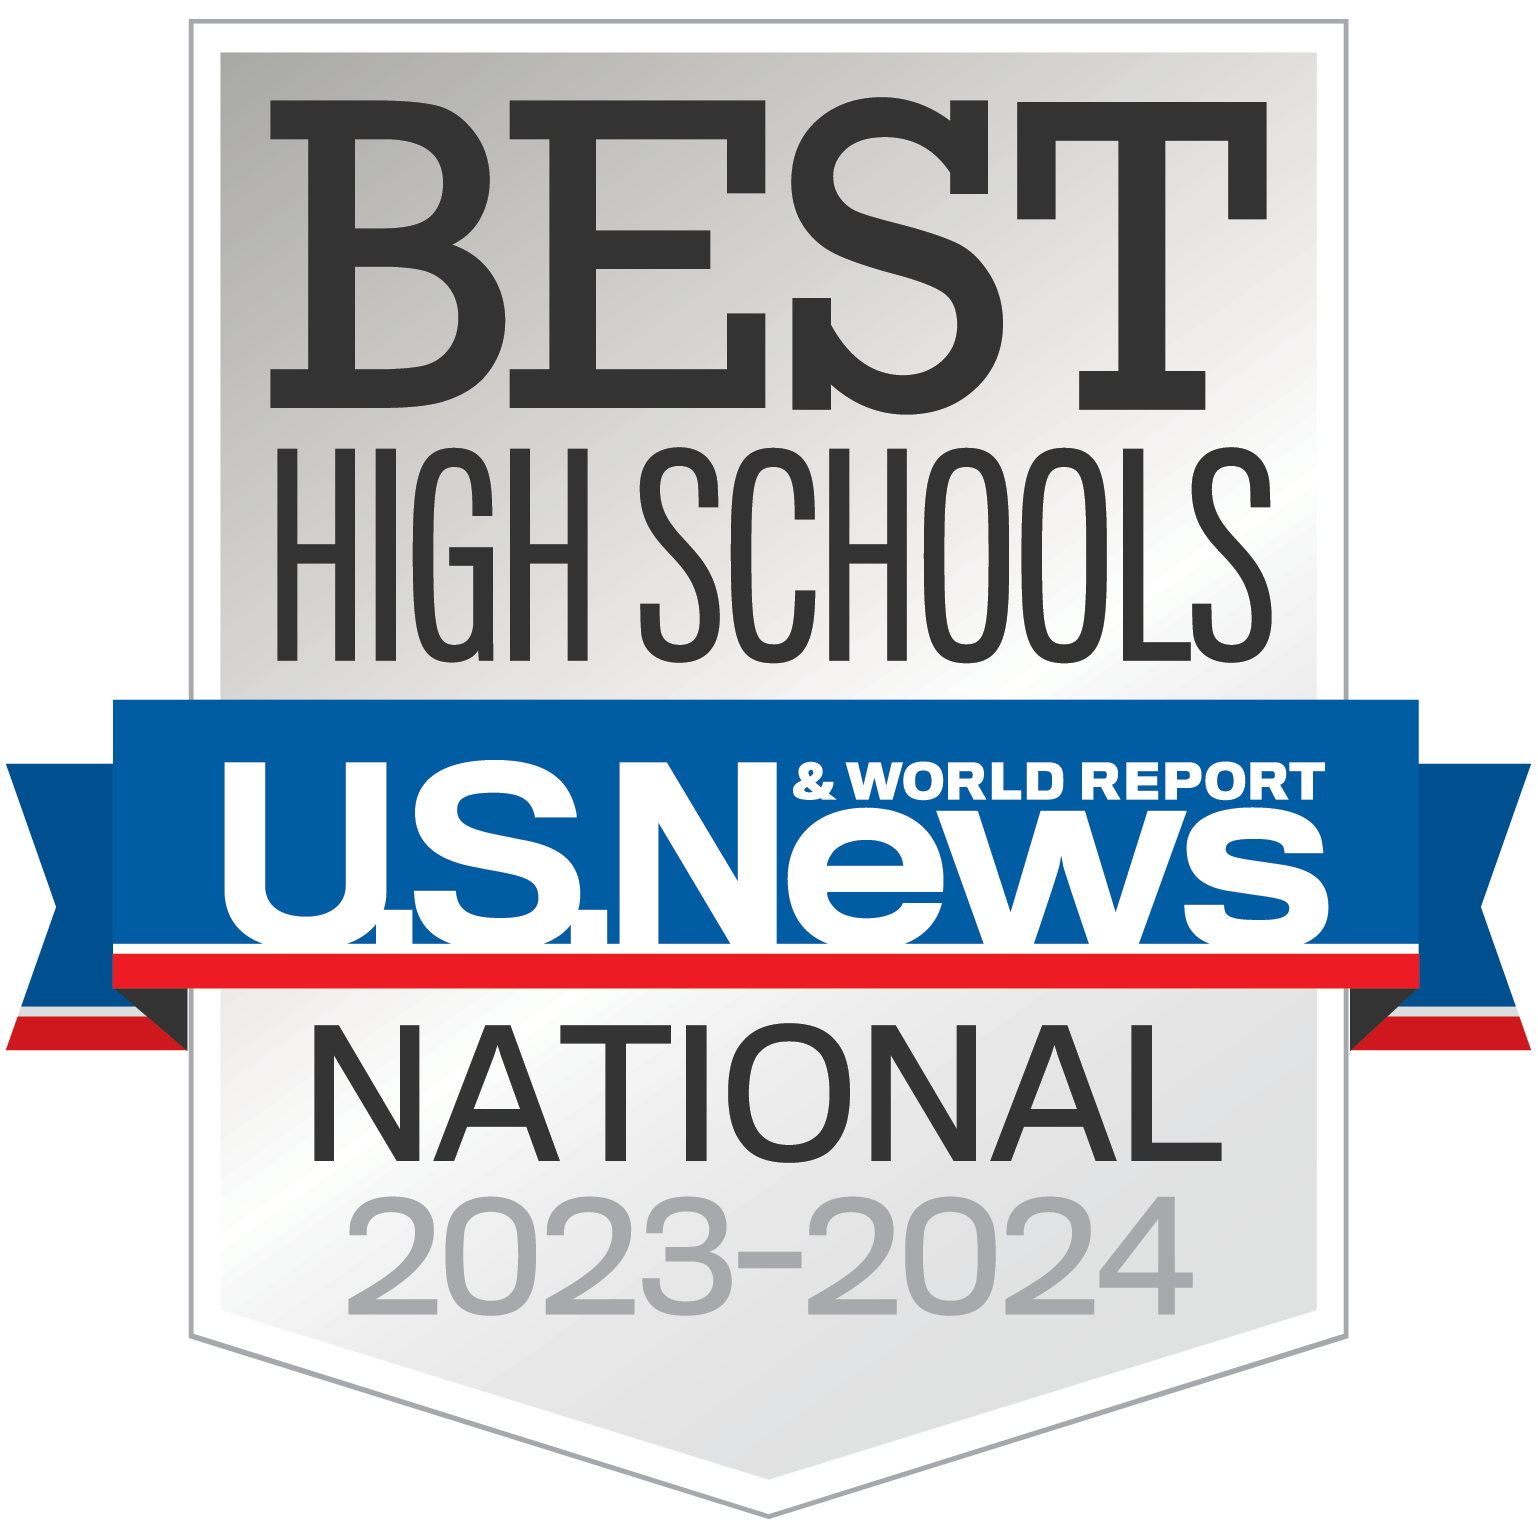 Best High Schools - National 2023-2034. U.S. News & World Report logo